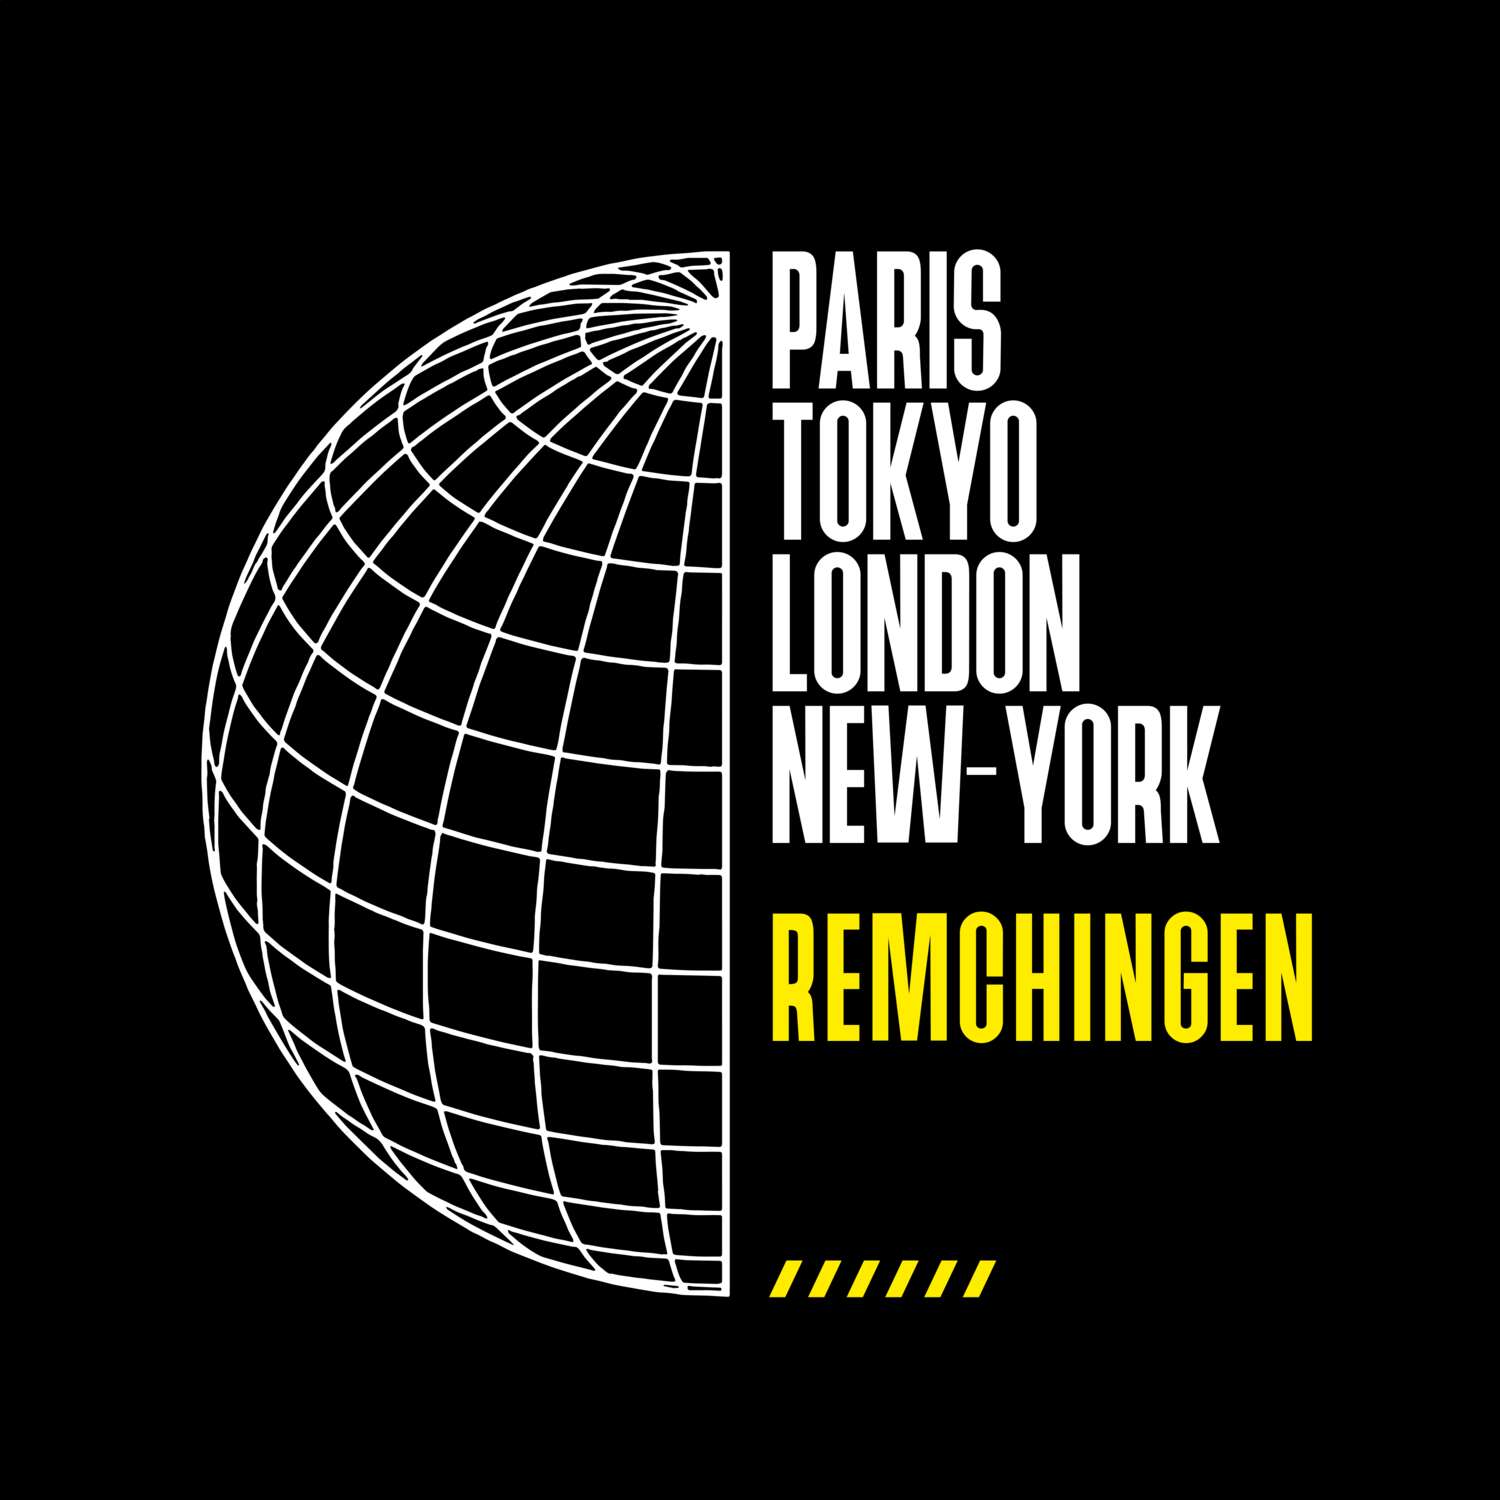 Remchingen T-Shirt »Paris Tokyo London«